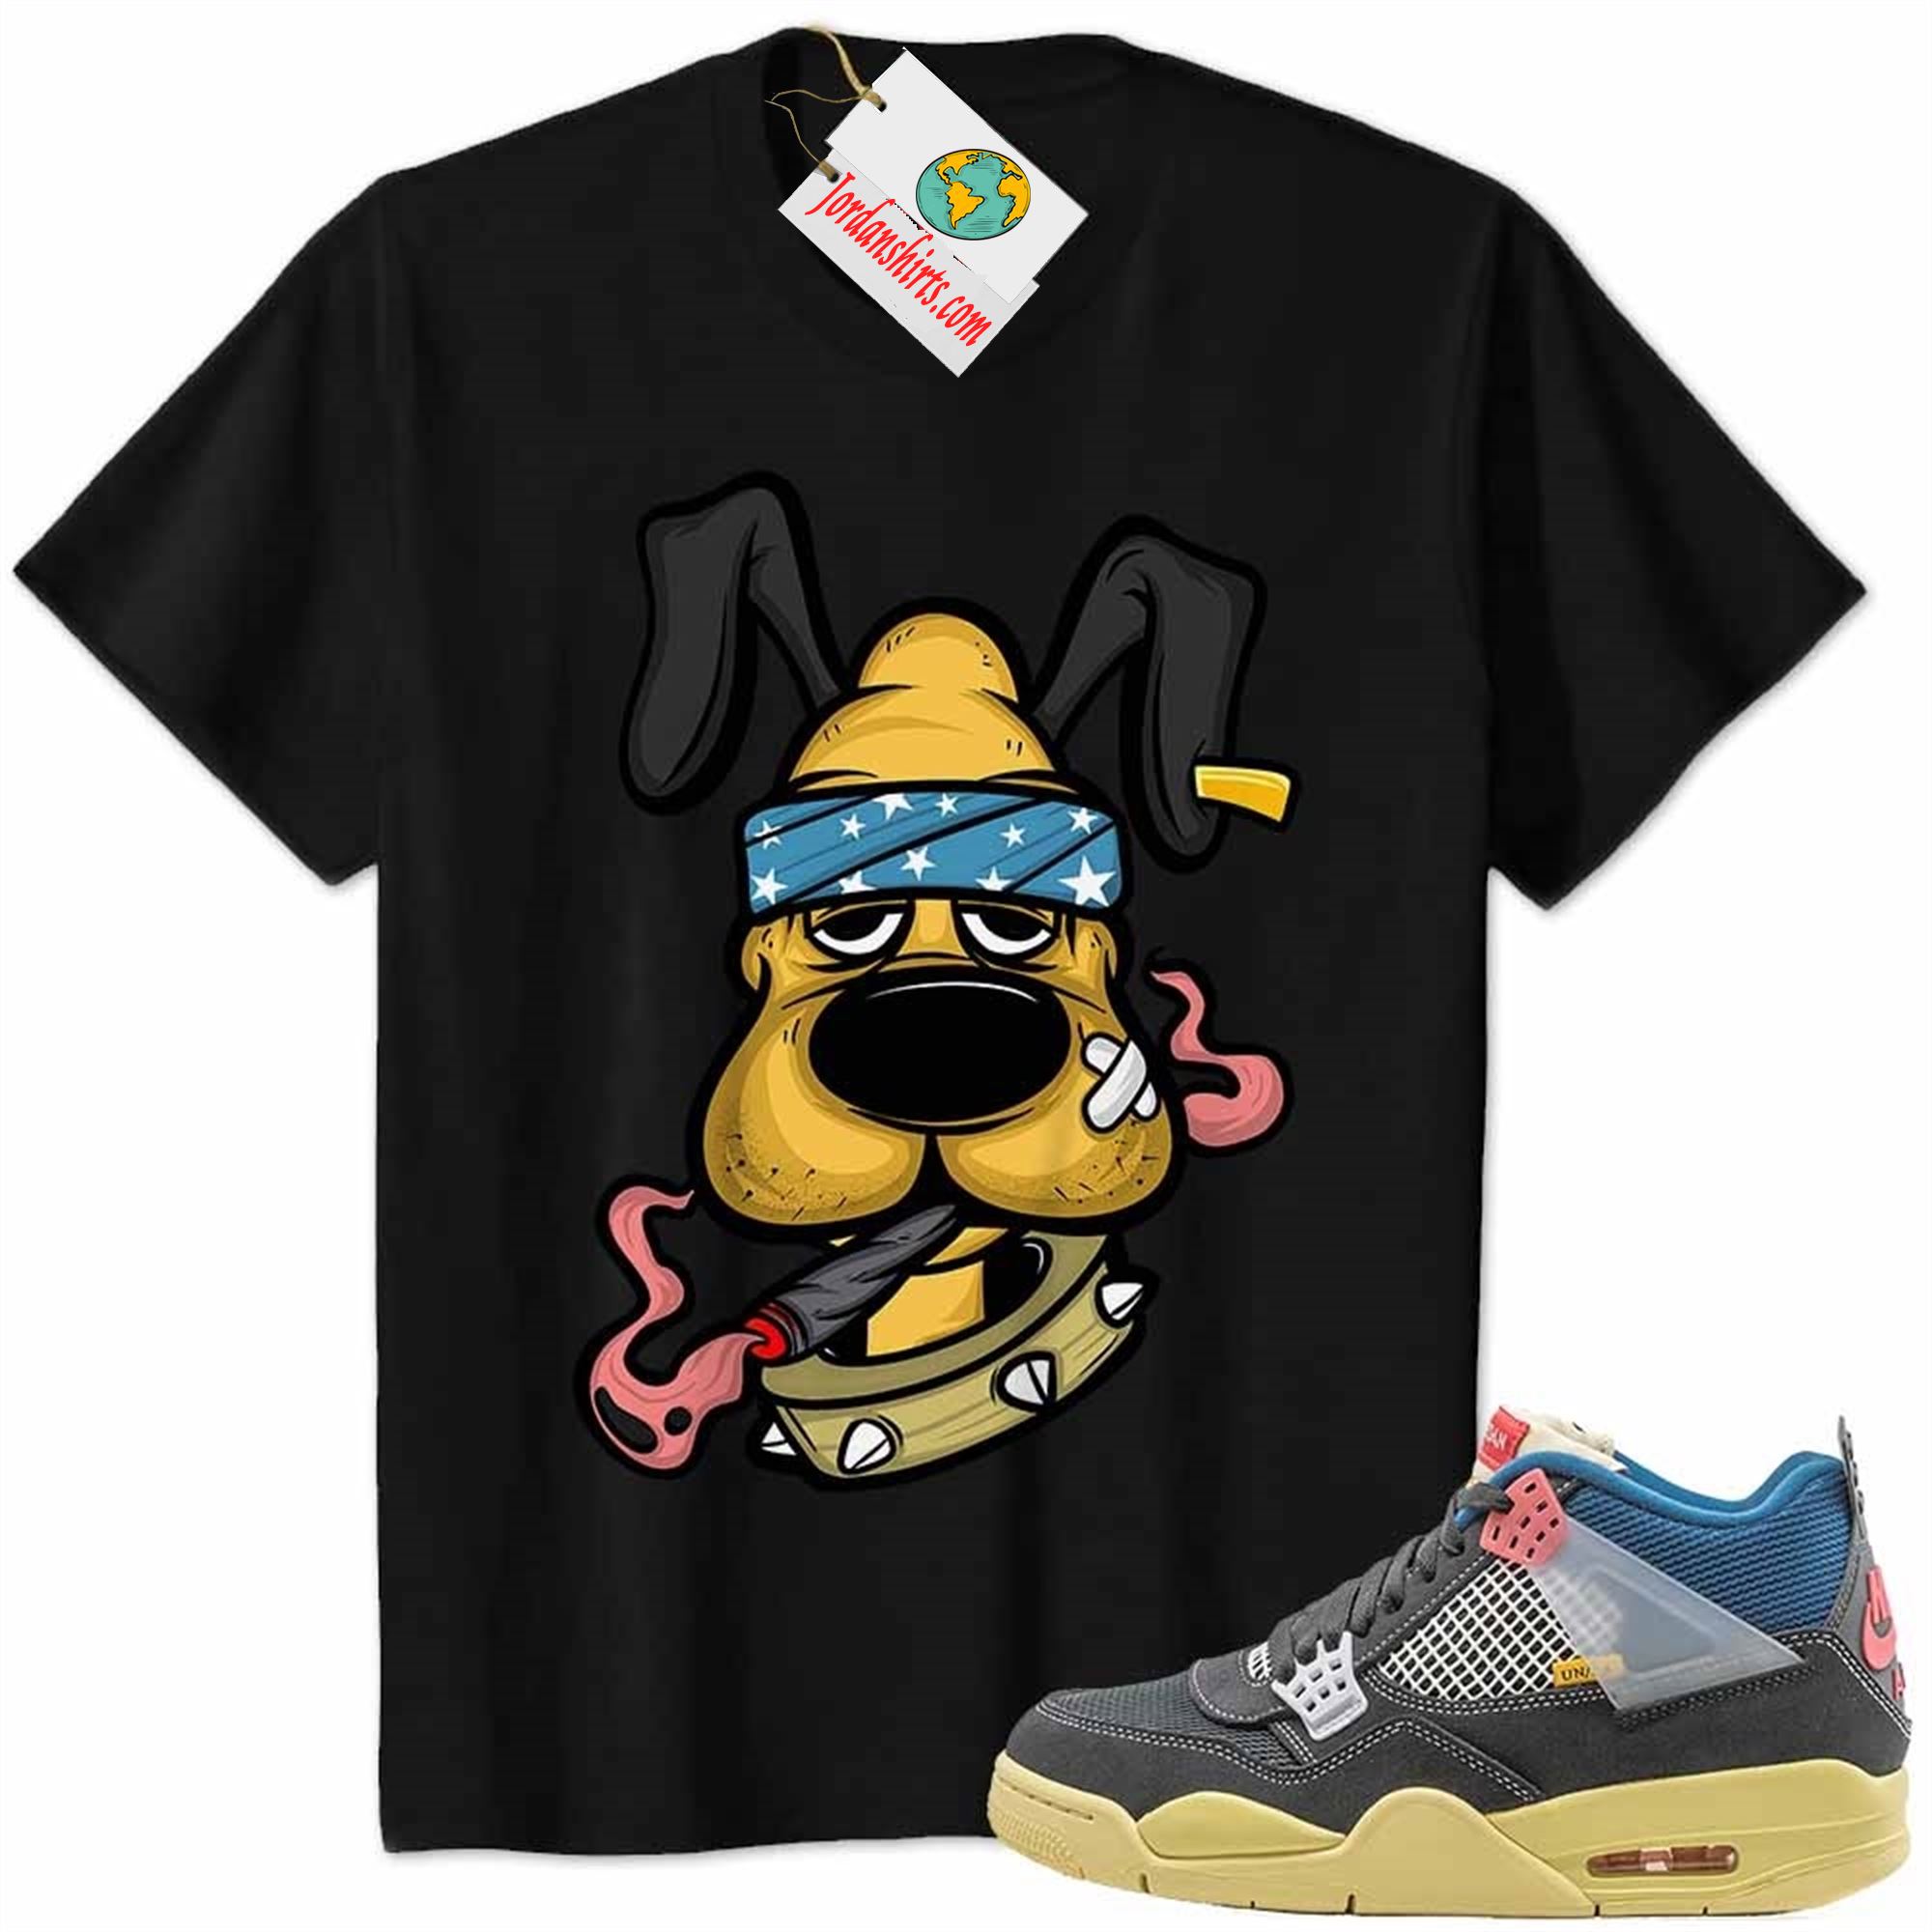 Jordan 4 Shirt, Gangster Pluto Smoke Weed Black Air Jordan 4 Union Off Noir 4s Full Size Up To 5xl